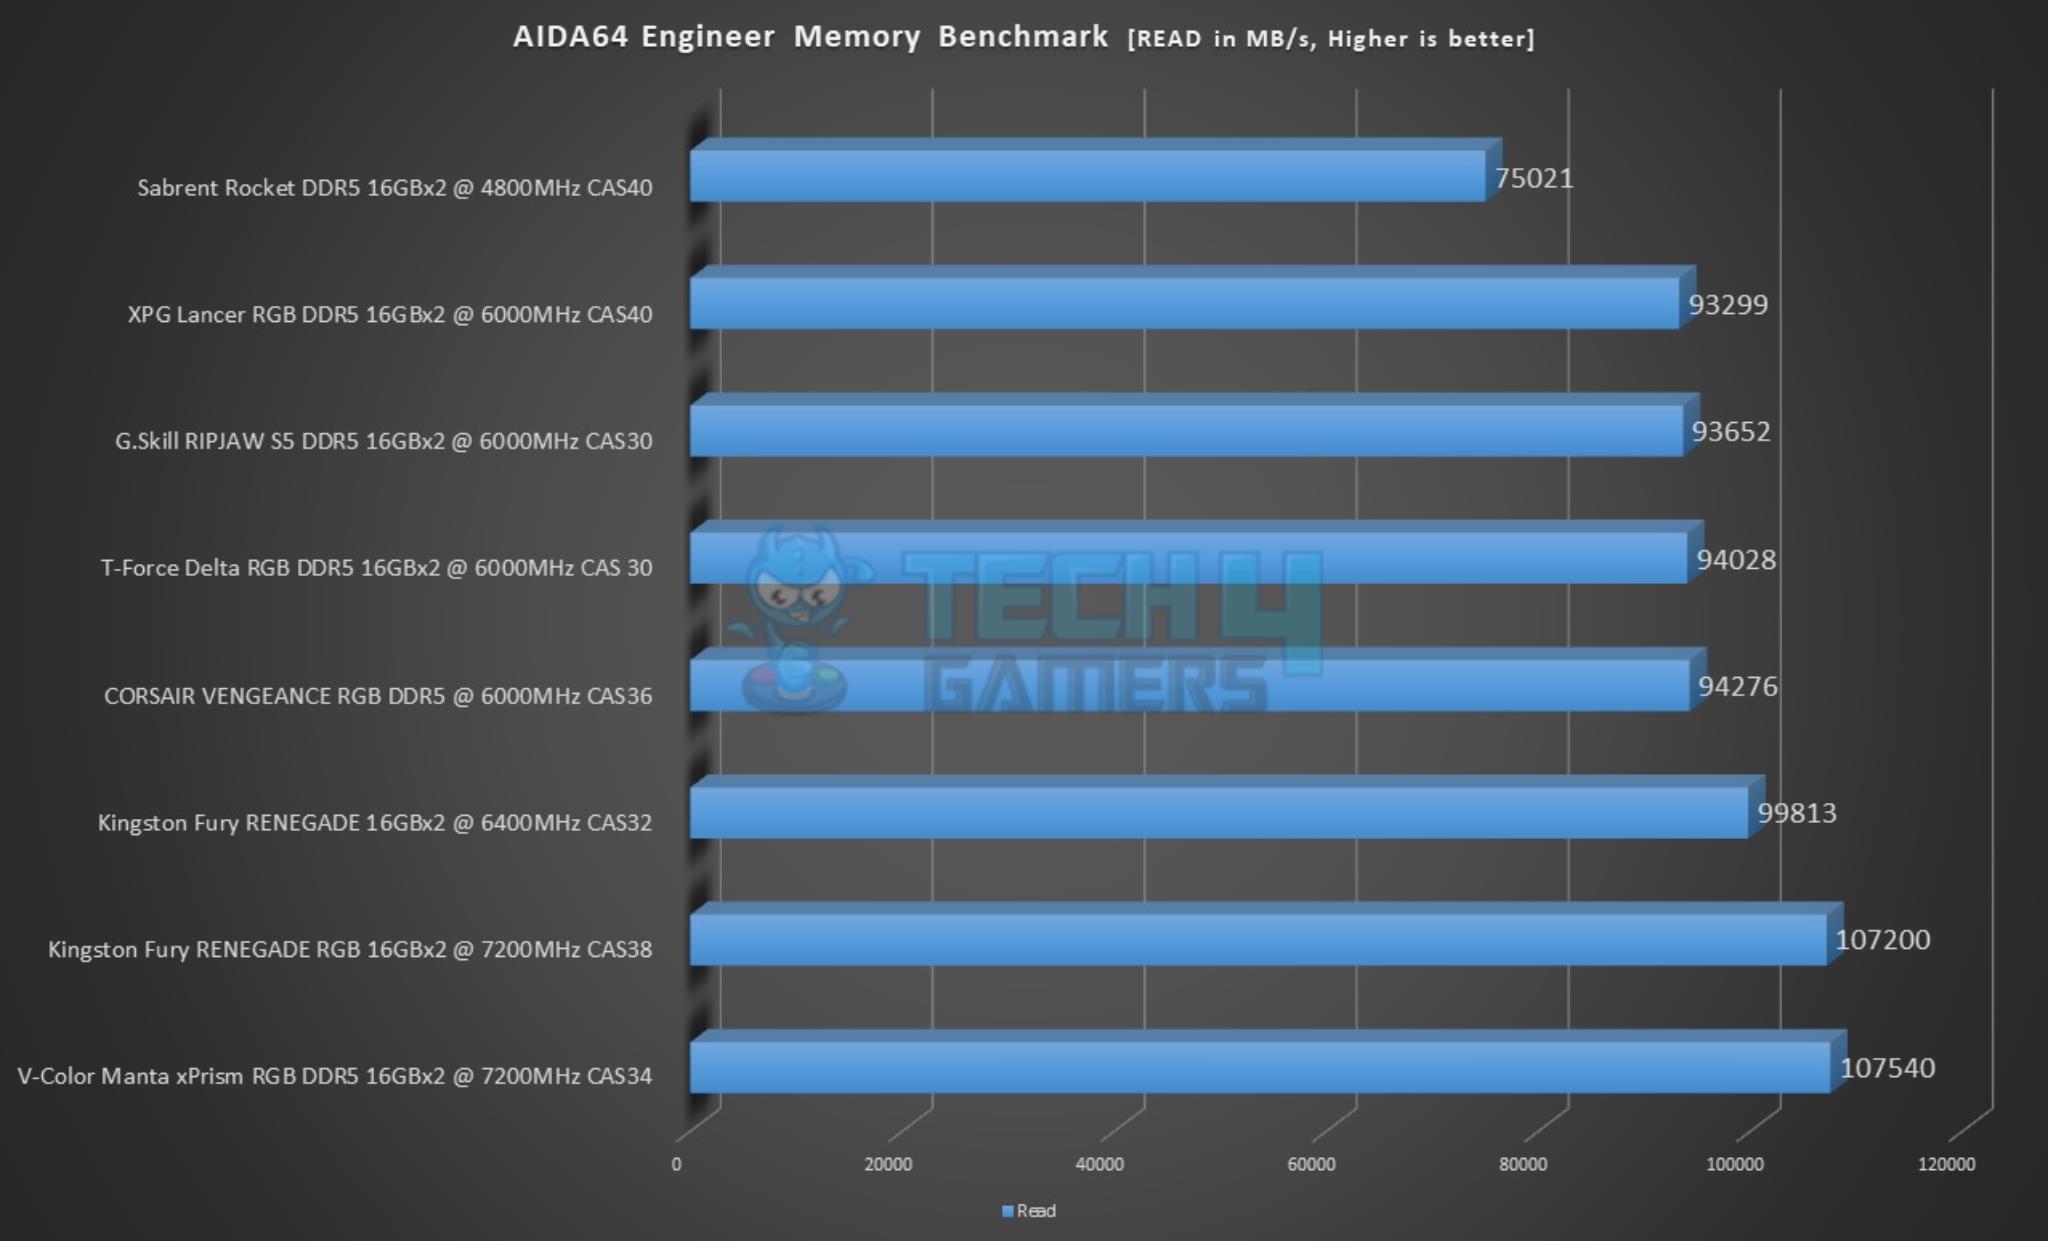 V-Color Manta xPrism RGB DDR5 32GB — AIDA64 Memory Read Benchmark